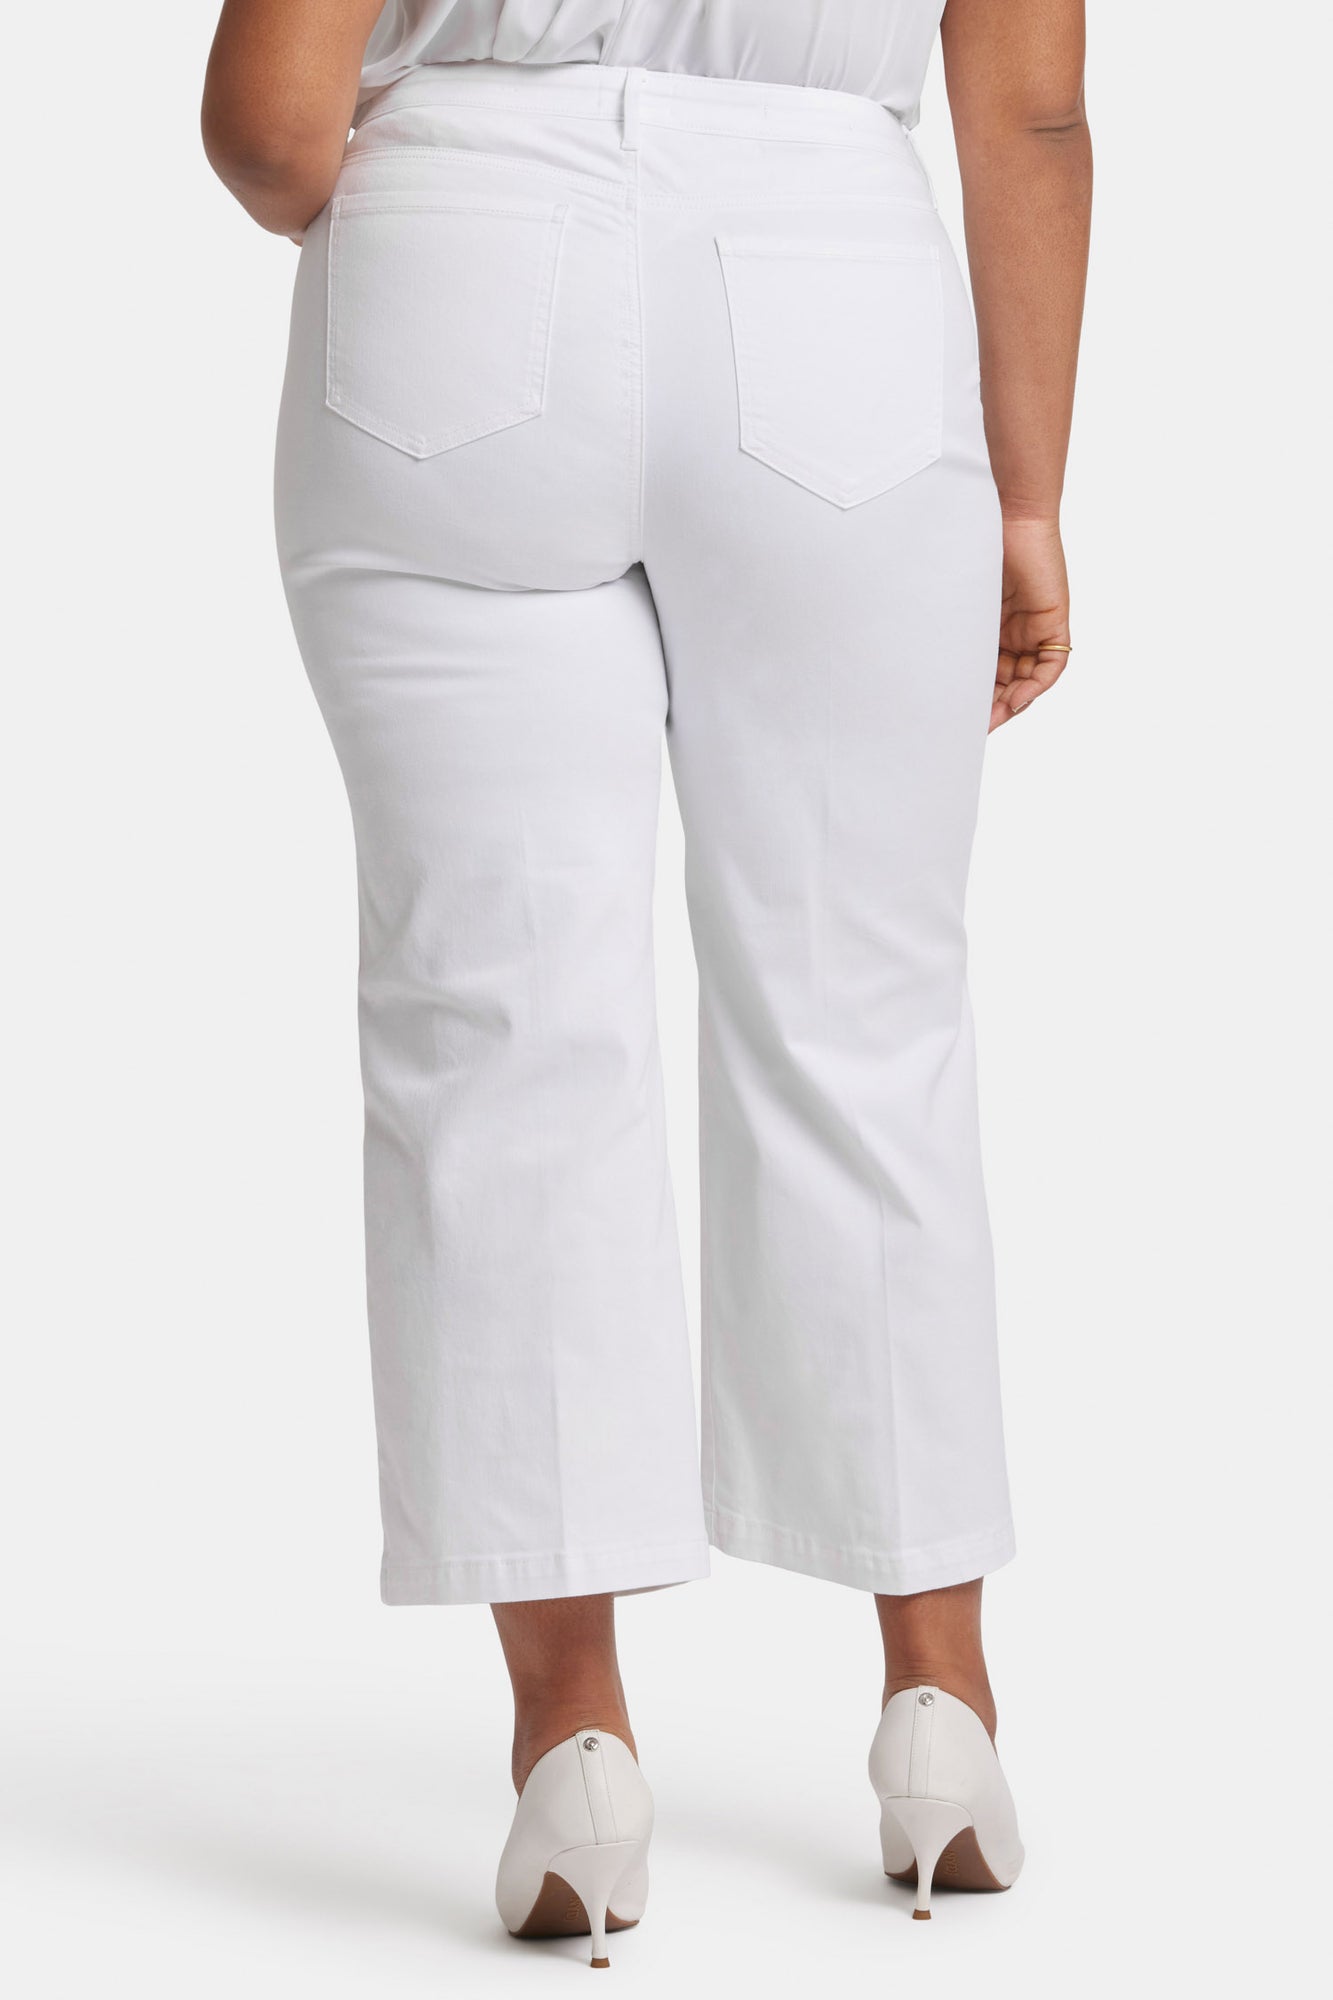 Teresa Wide Leg Ankle Jeans in Plus Size - Optic White White | NYDJ